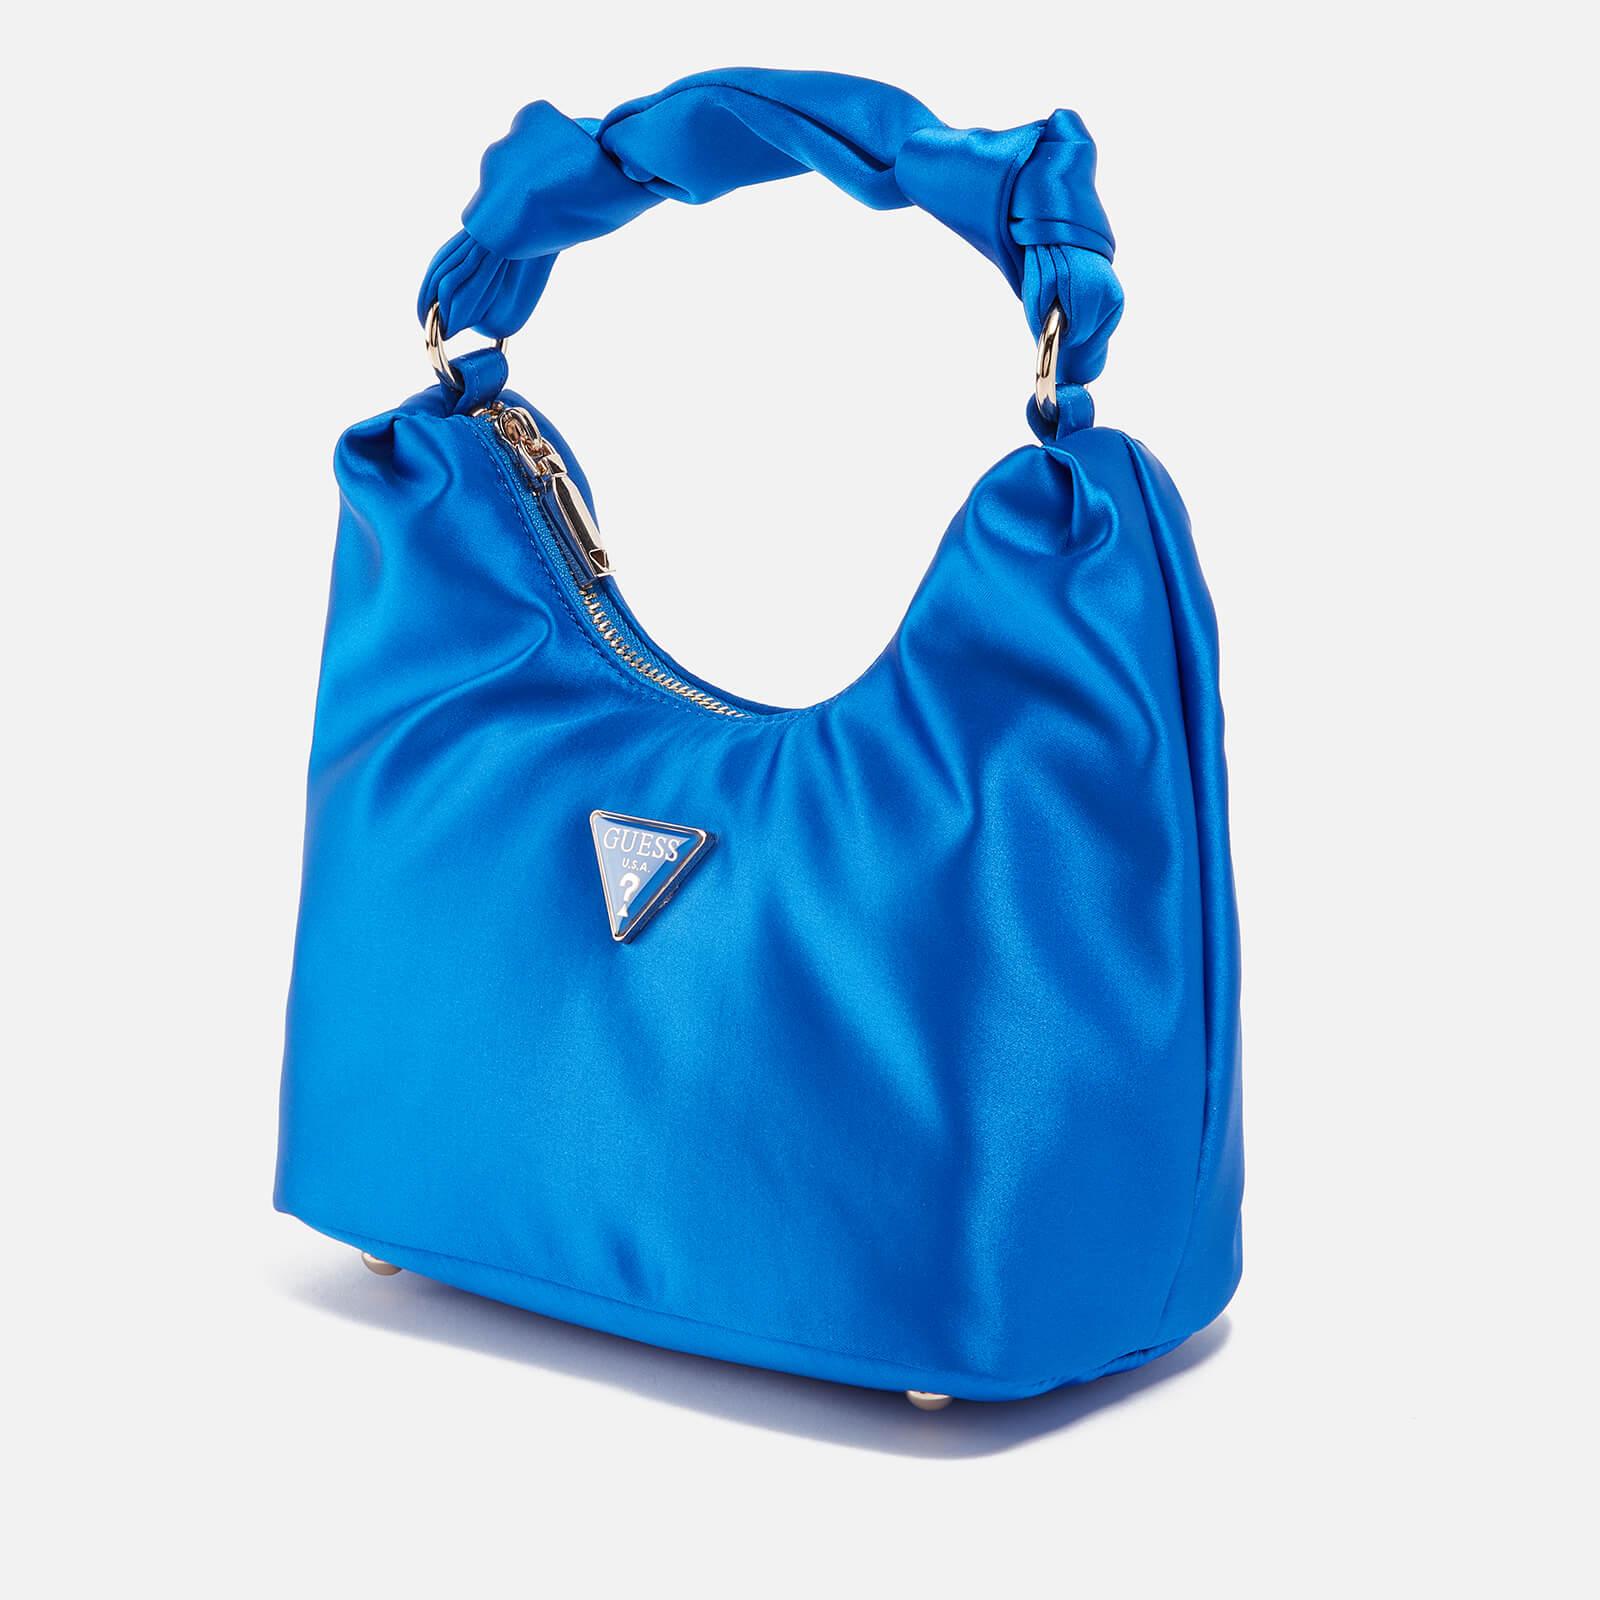 Guess Velina Satin Hobo Bag in Blue | Lyst